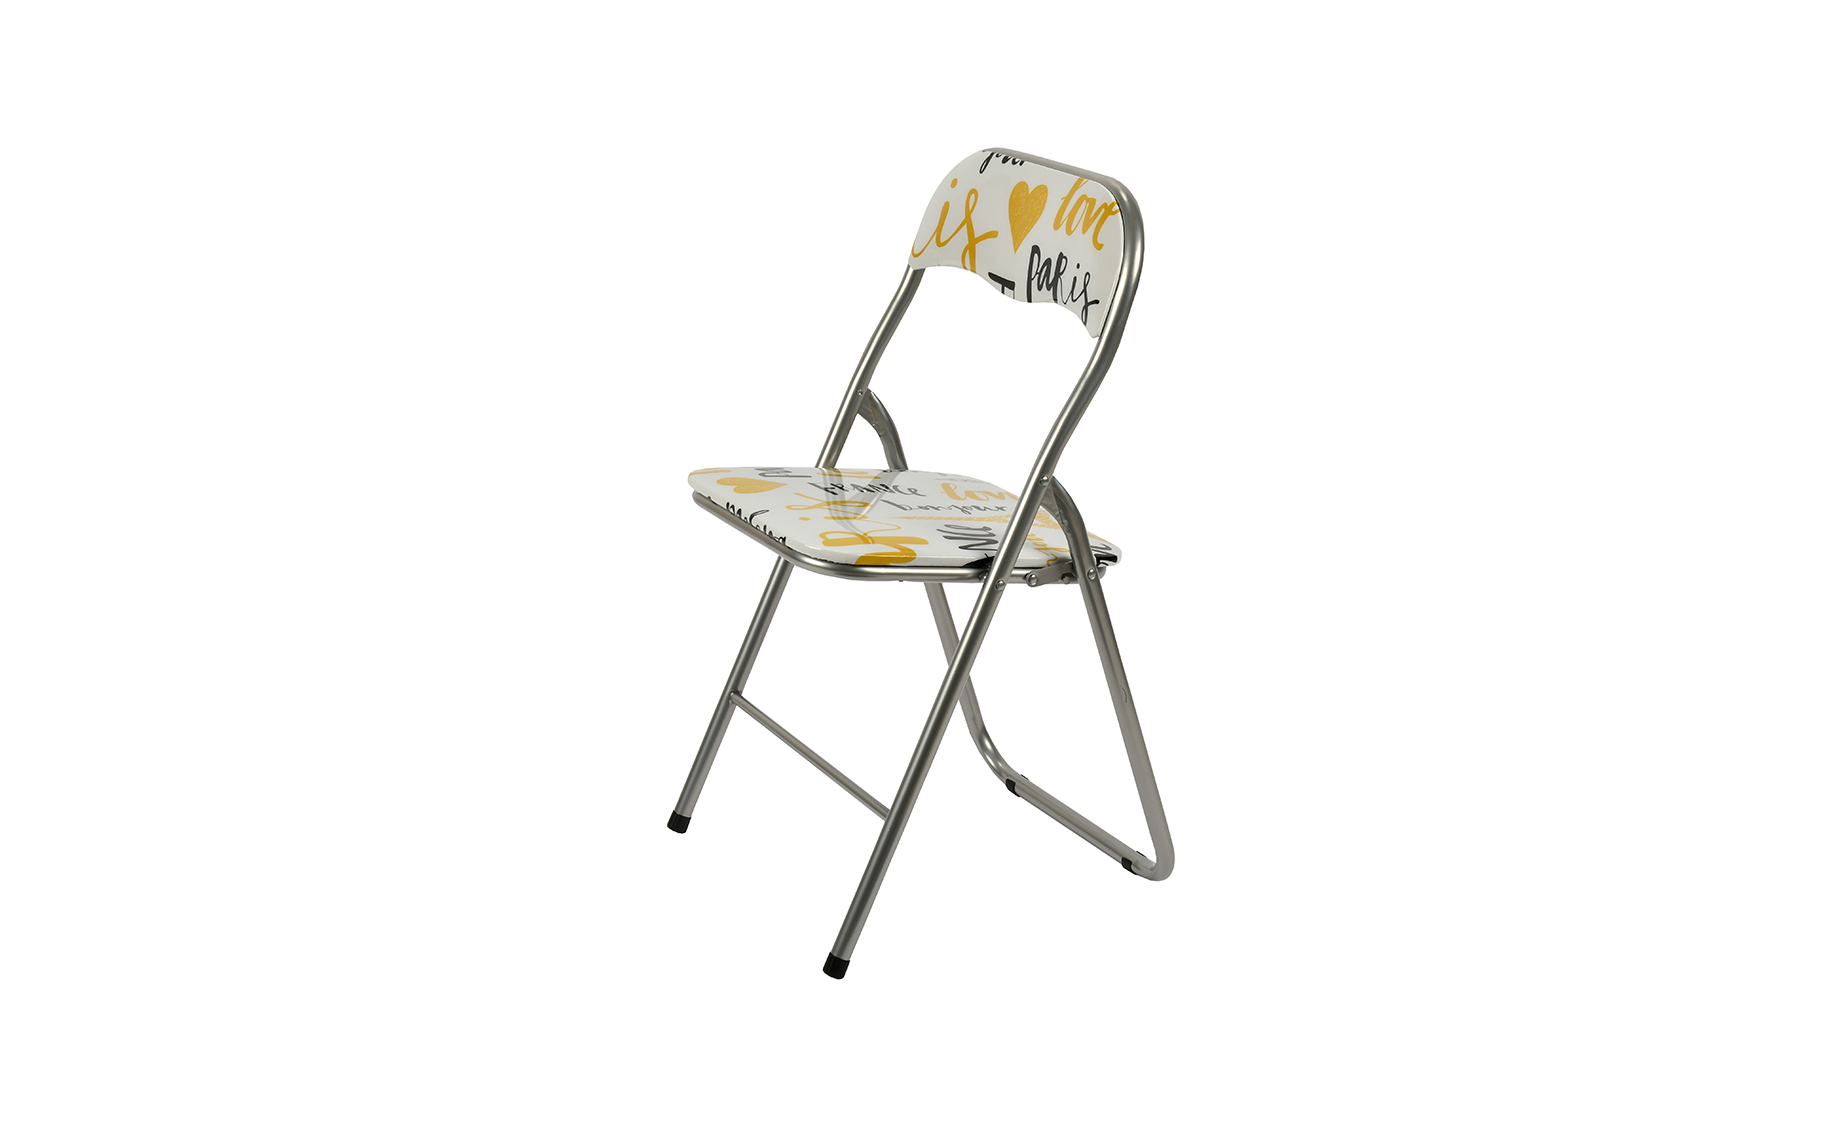 Alyn preklopna stolica 45x45x80cm Love Paris